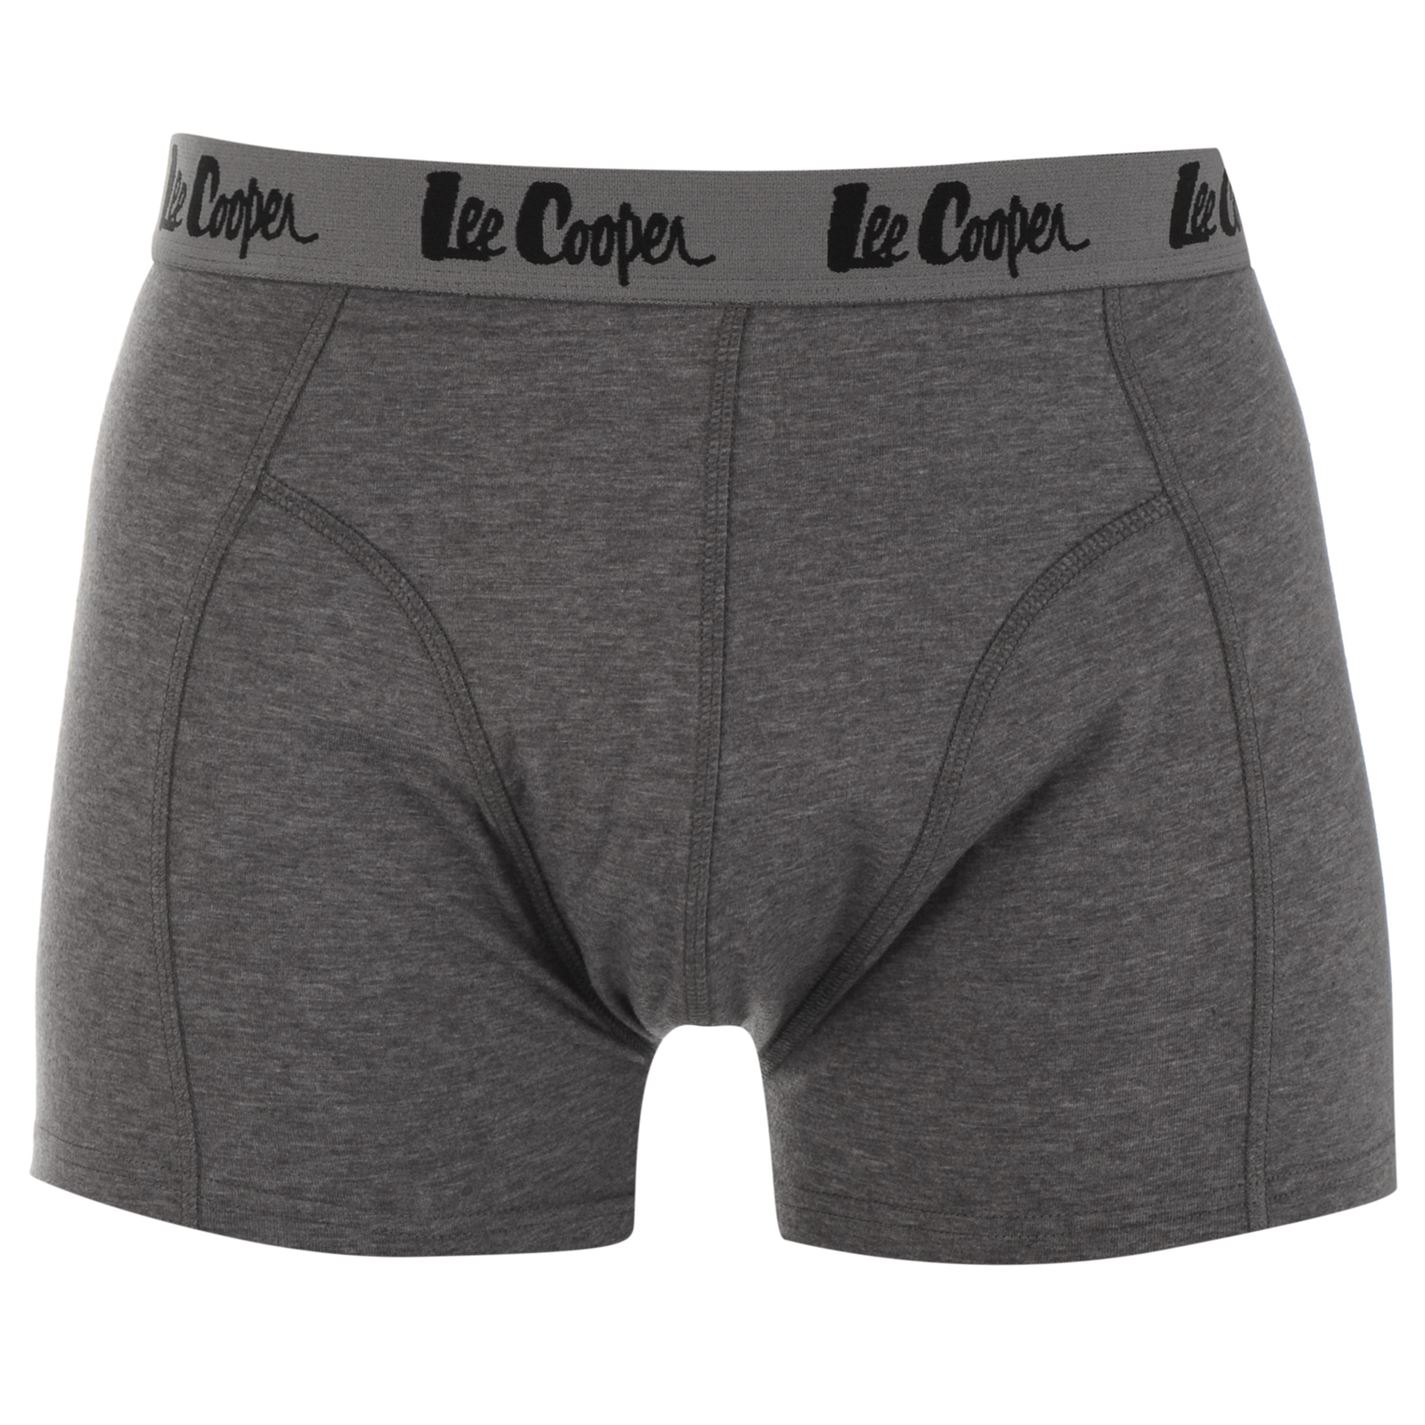 Lee Cooper Mens Boxers Trunks Briefs 5 Pack Boxer Underwear Cotton Rich ...